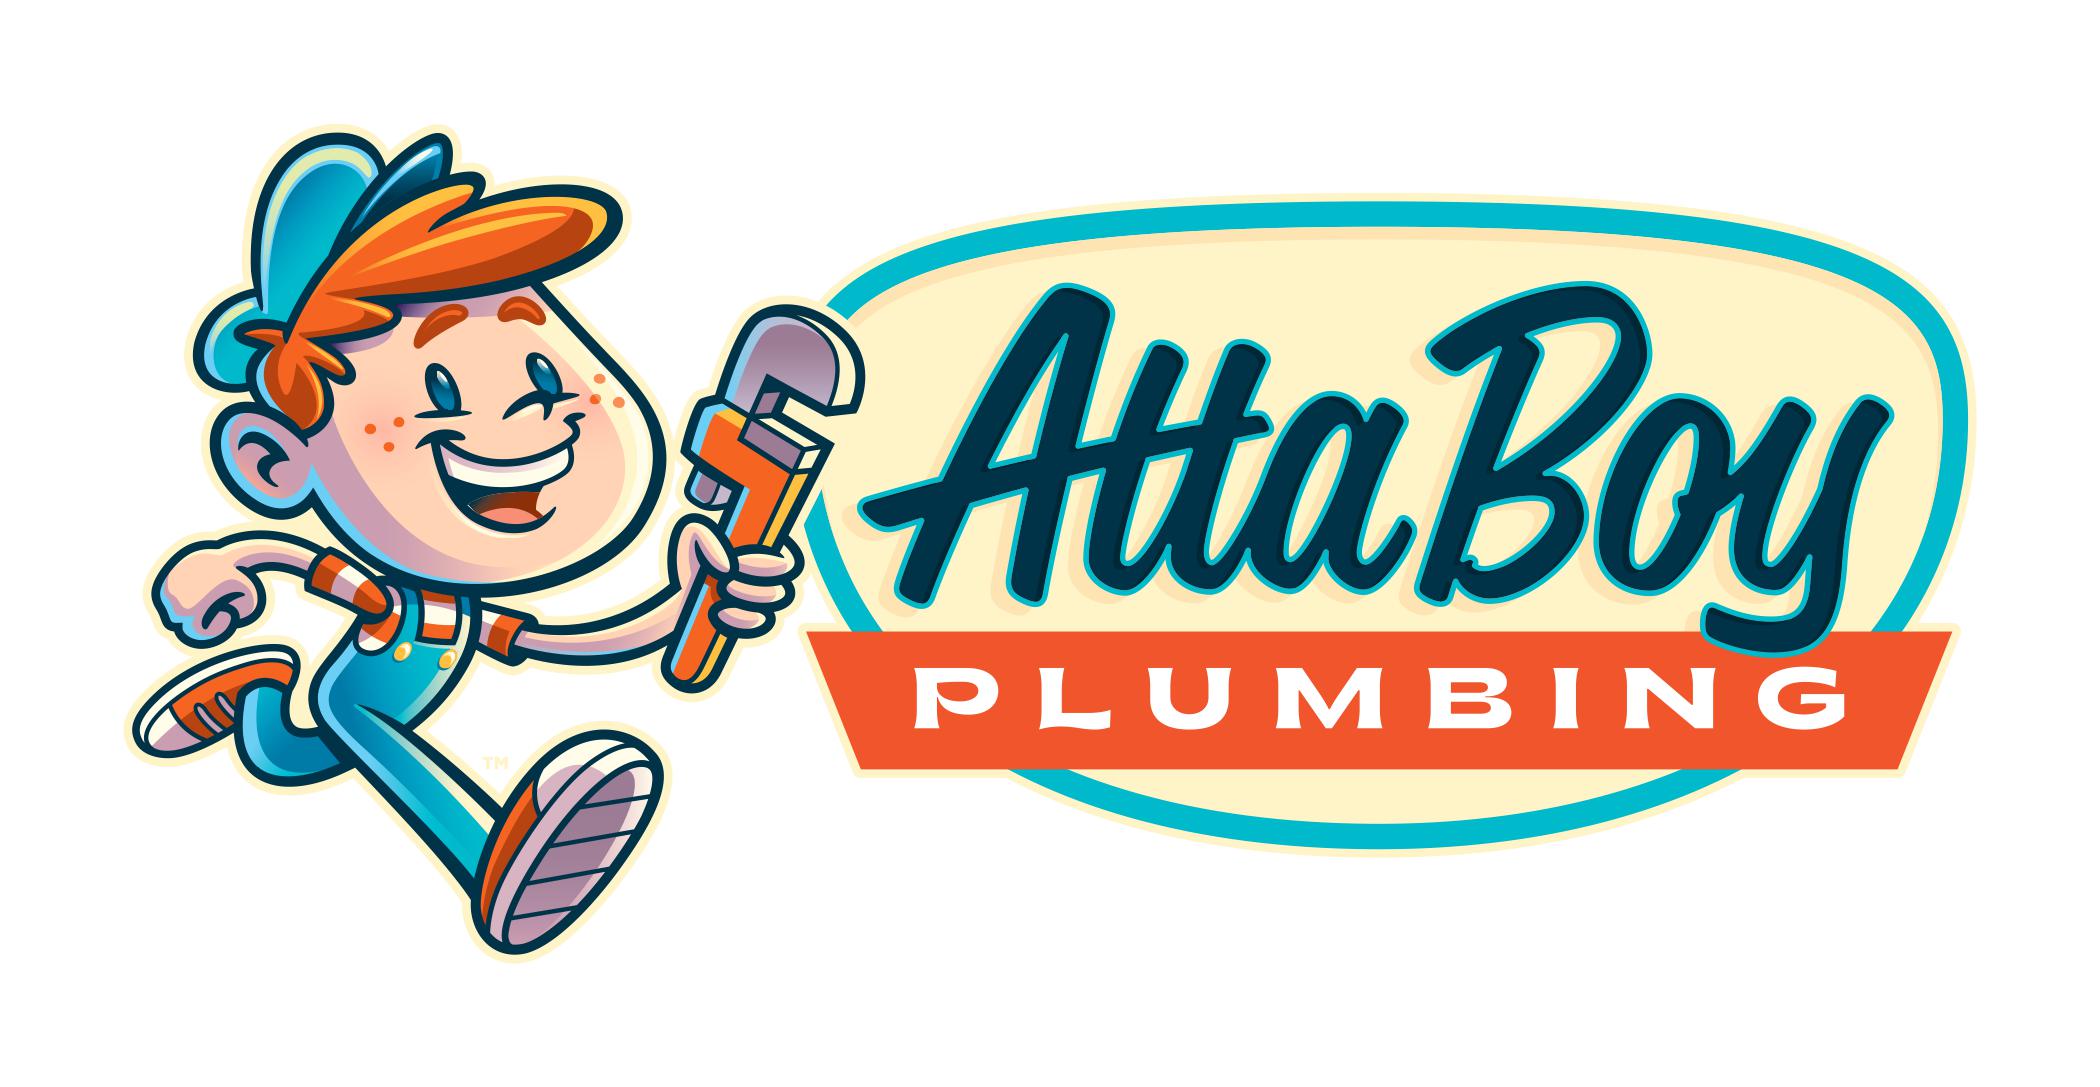 Attaboy Plumbing Logo